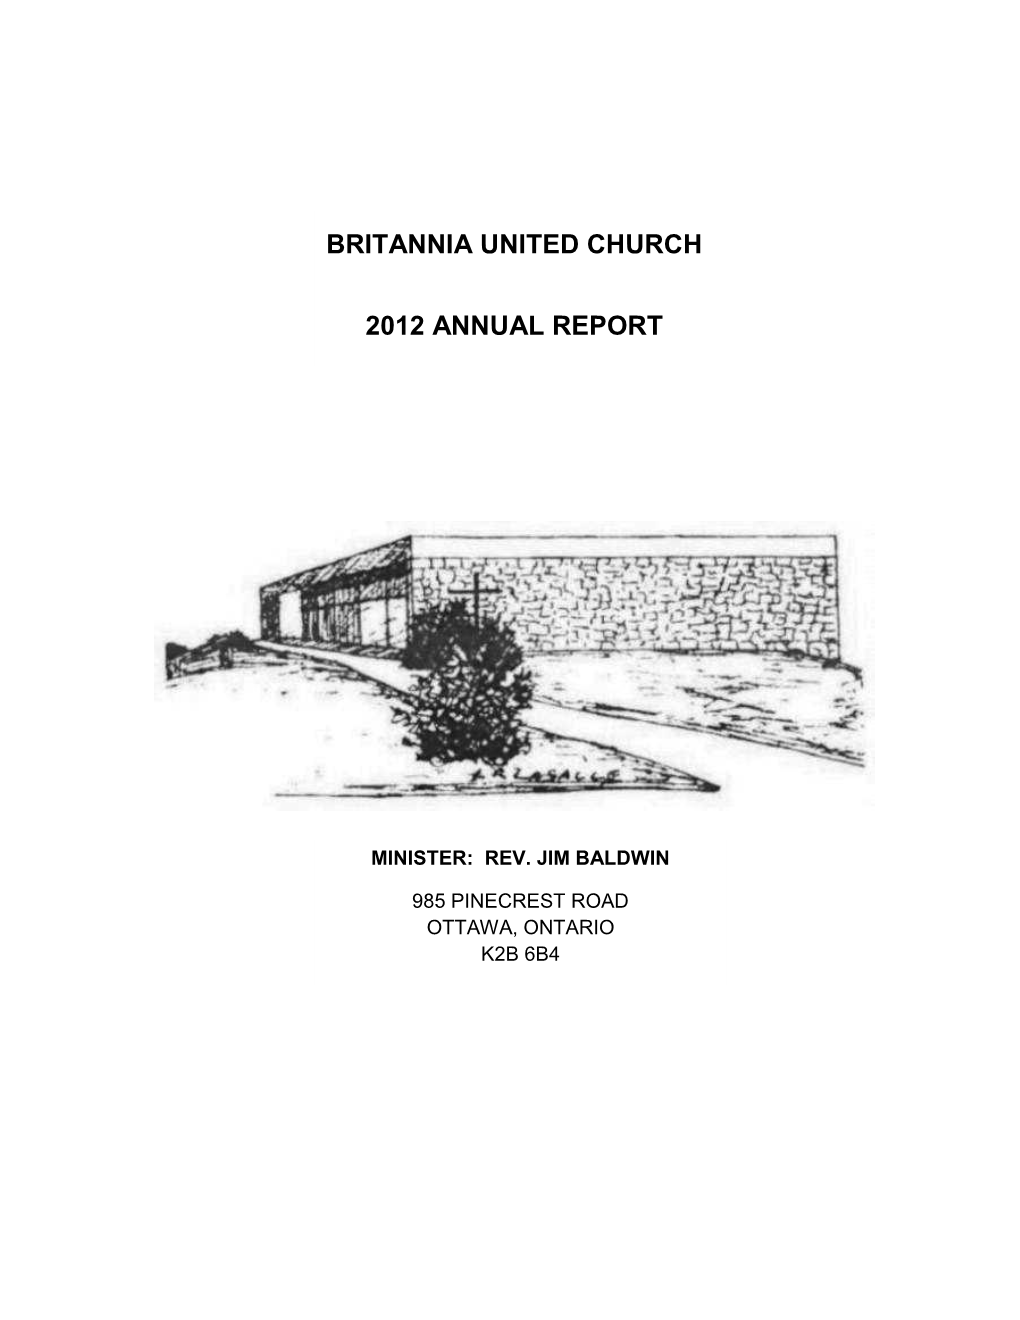 Britannia United Church 2012 Annual Report